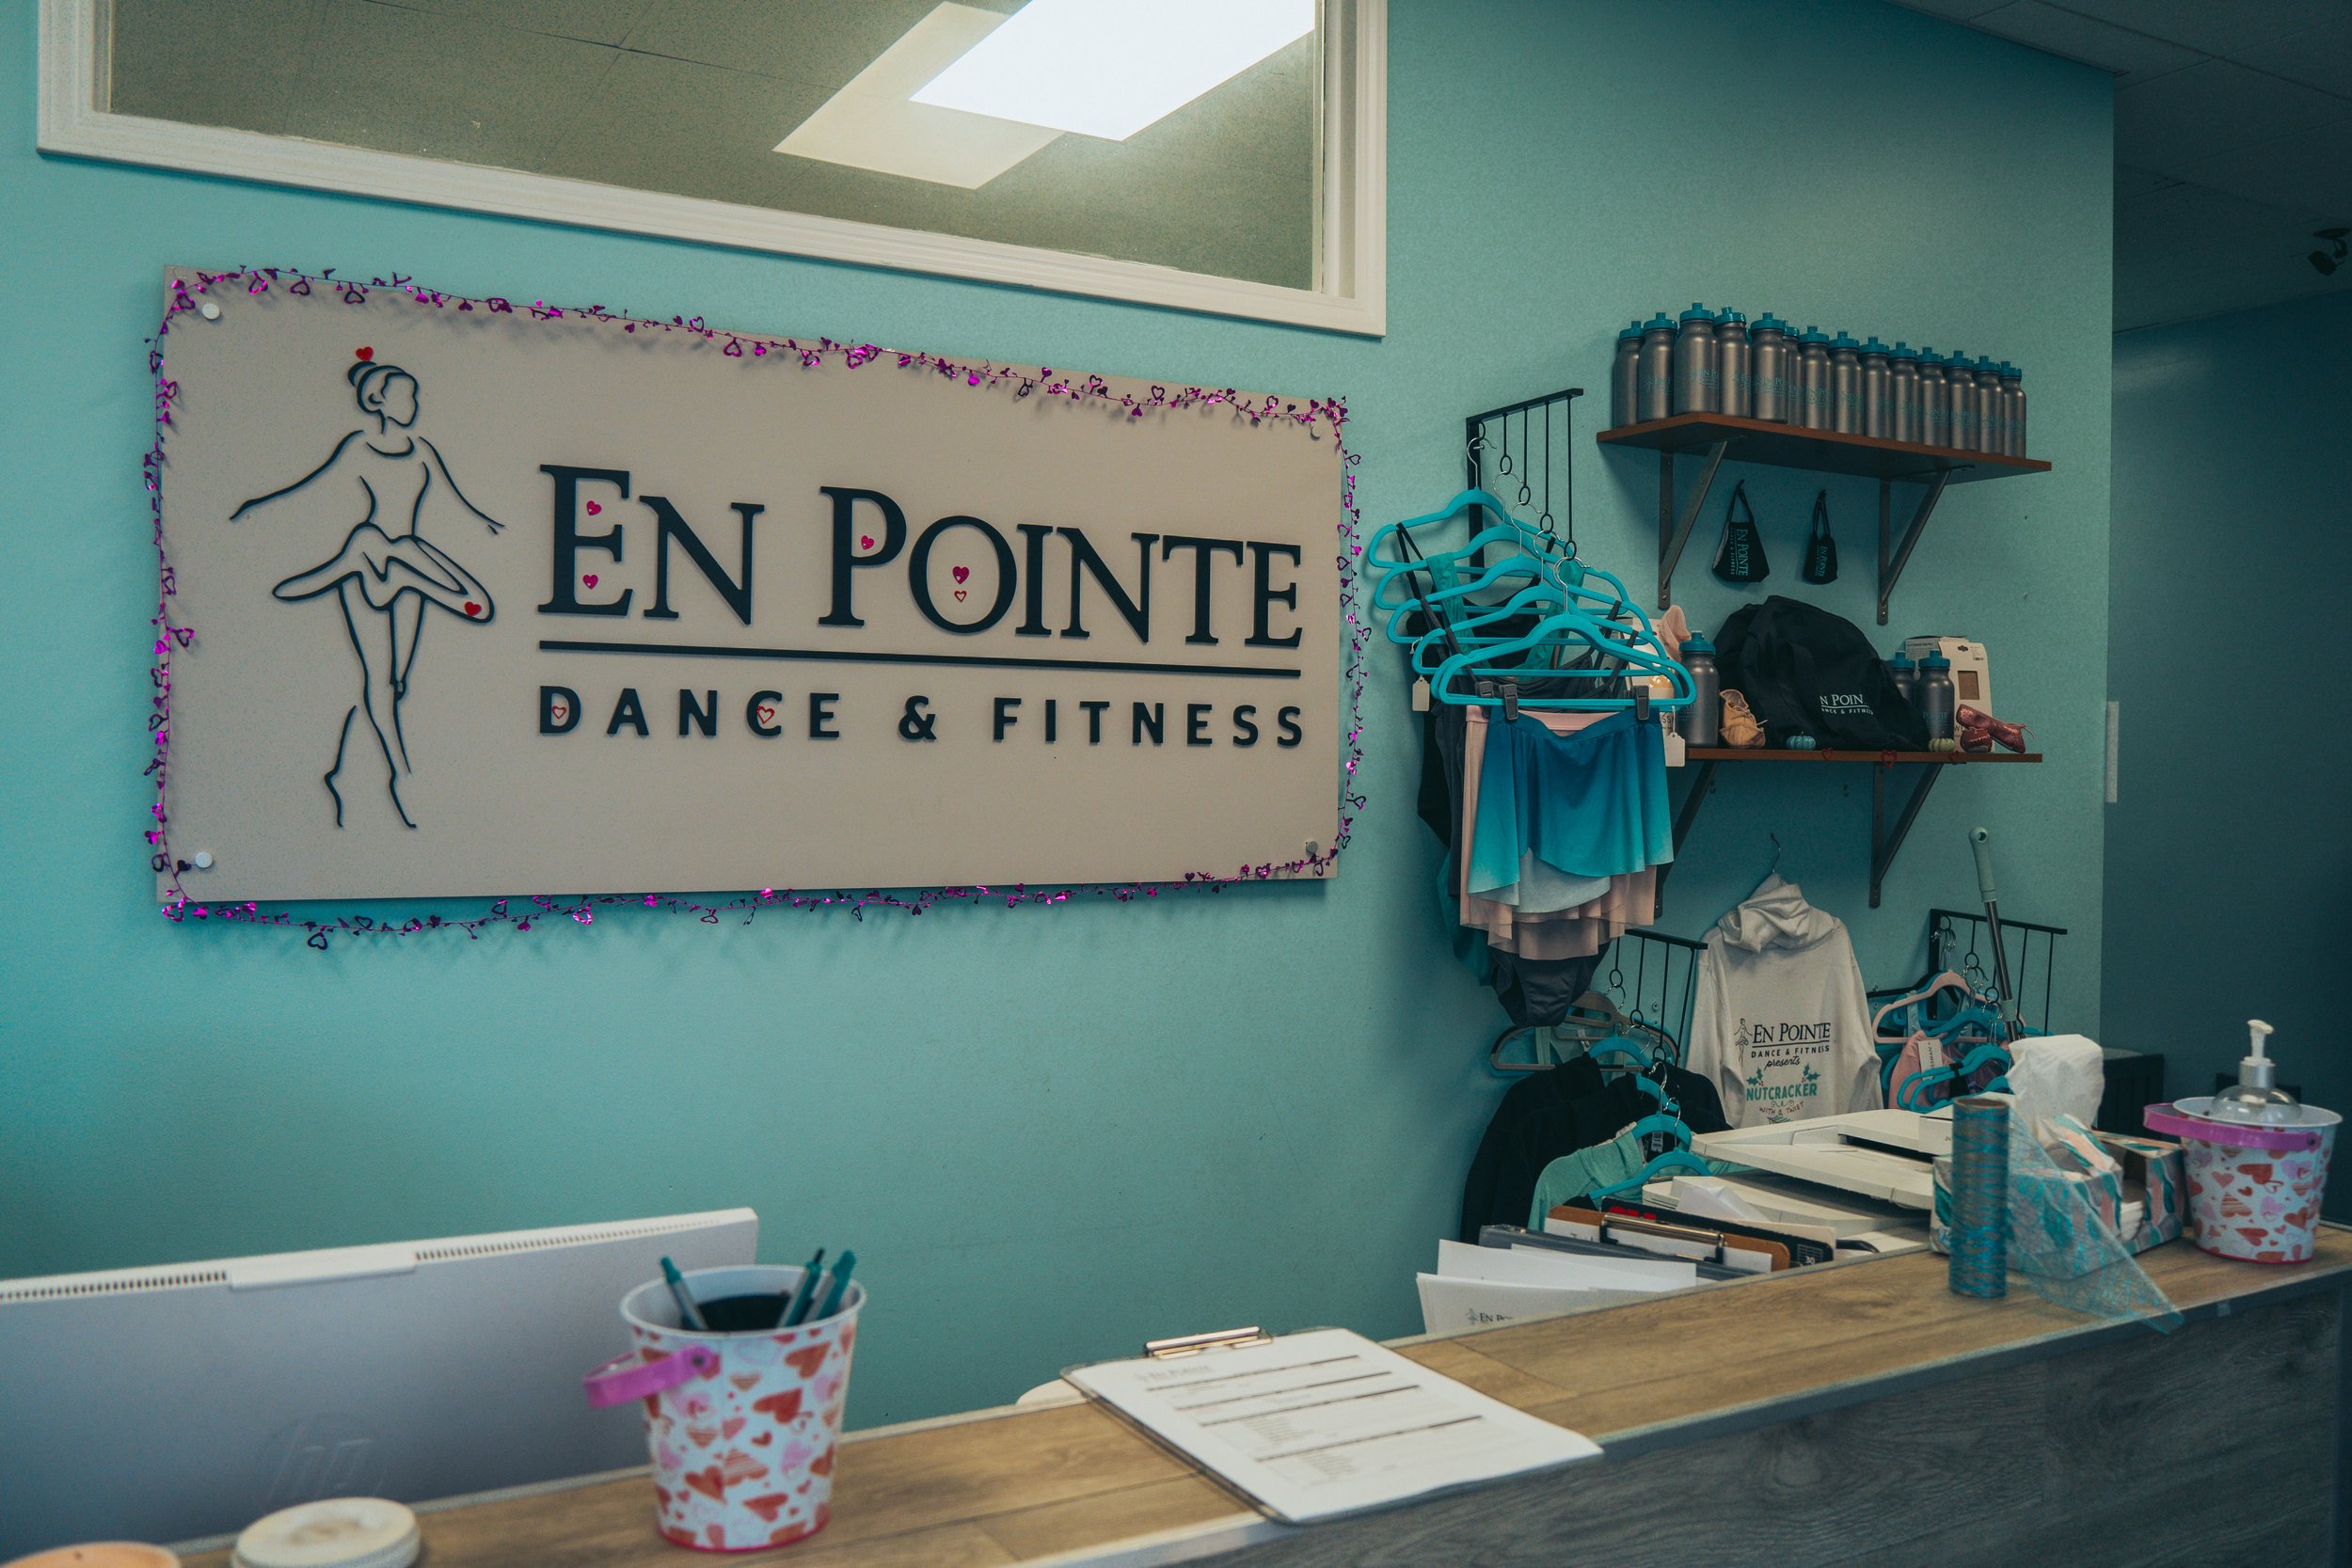  En Pointe was opened in 2012 by long-time community resident and dancer Celinda Bradley. 